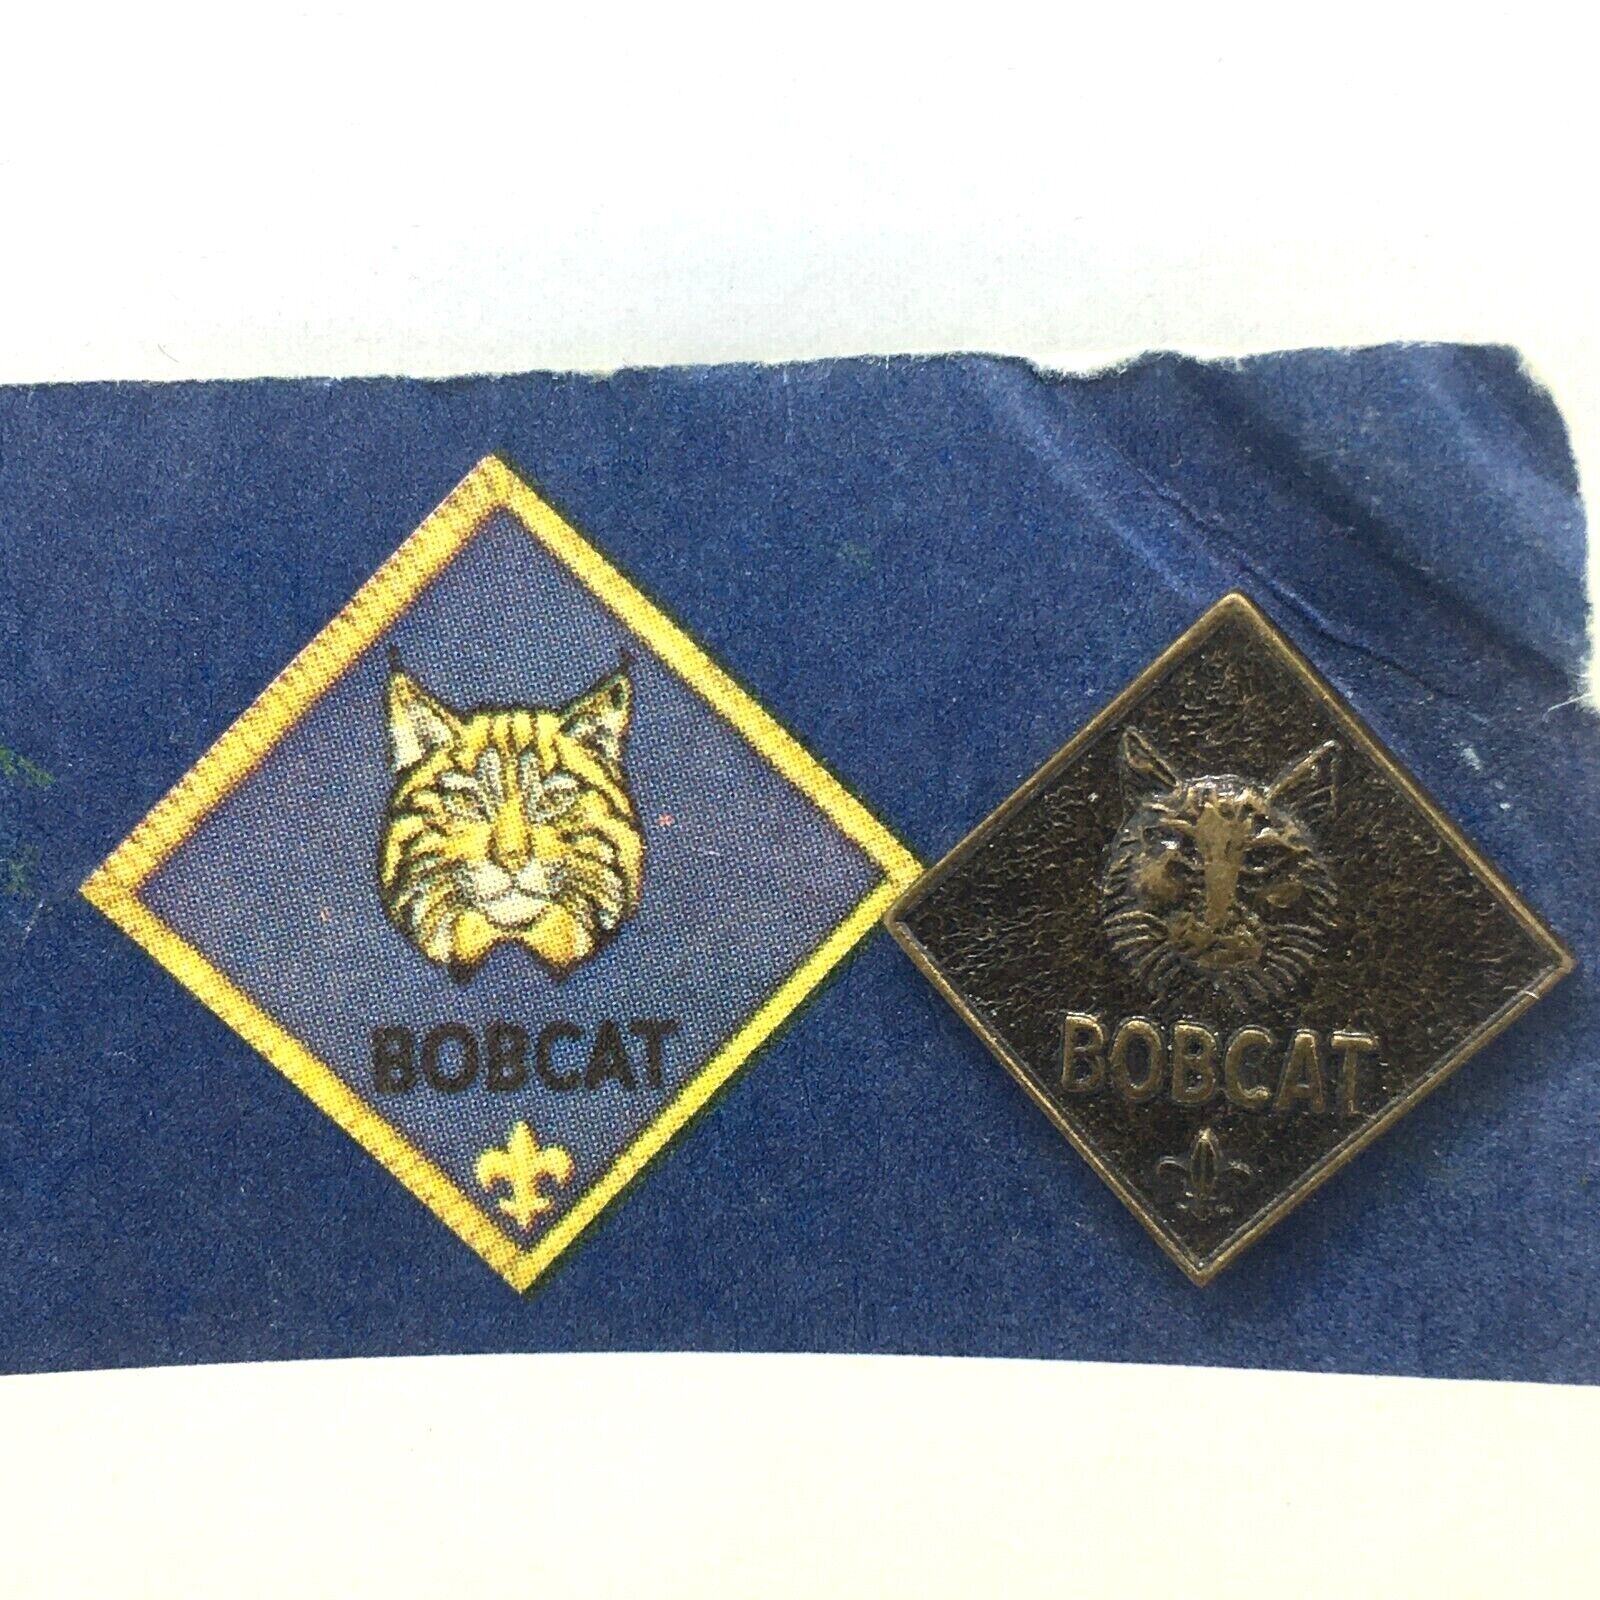 Vintage 1989 Bobcat Cub Scout Badge Pin on Boy Scout Card